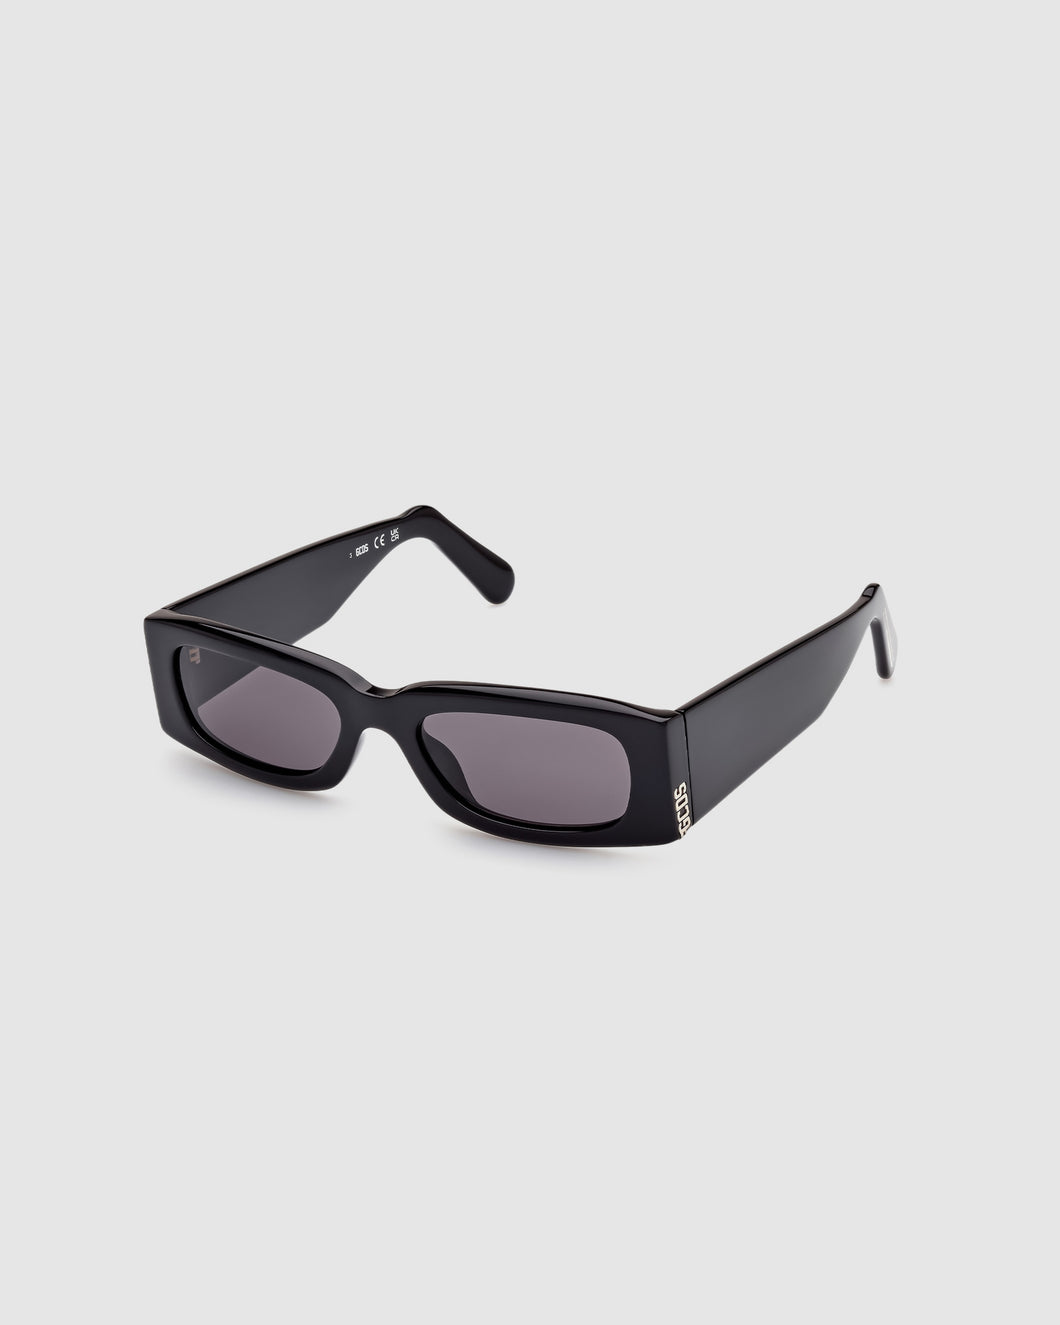 GD020 Rectangular sunglasses: Unisex Sunglasses Black | GCDS